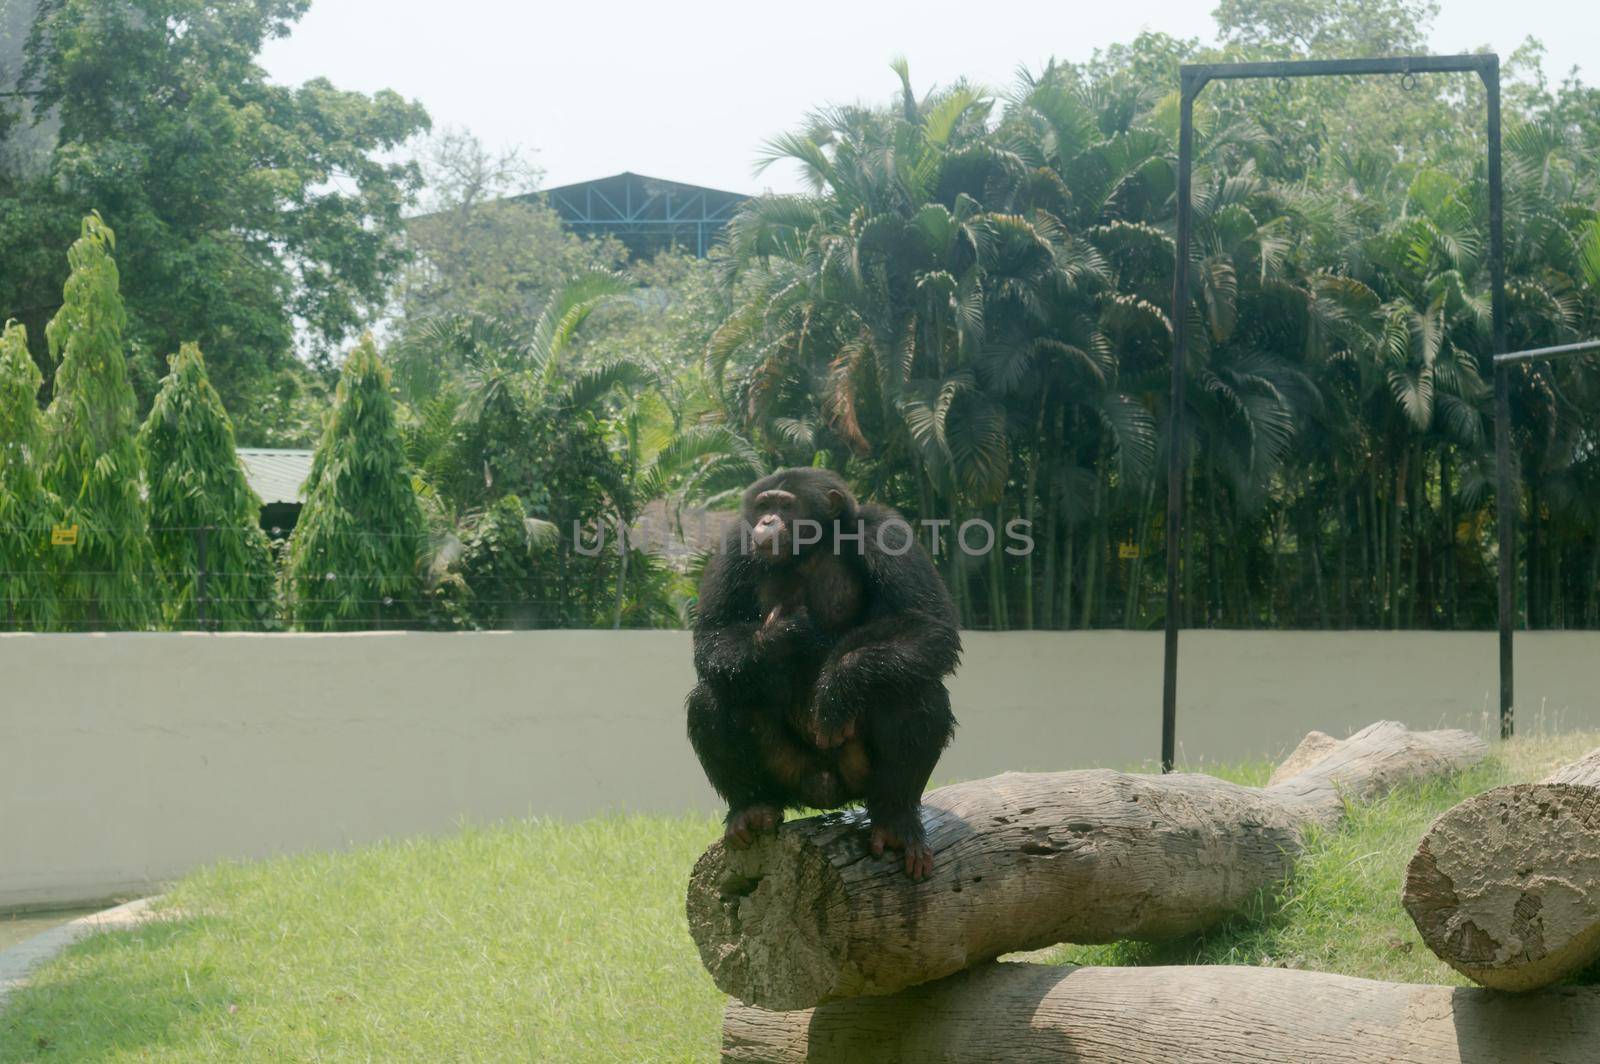 The wild chimpanzee (Pan troglodytes) Babu chimp, endangered species of great ape sitting on a Tree trunk at Alipur Zoological Garden, Kolkata, West Bengal, India South Asia